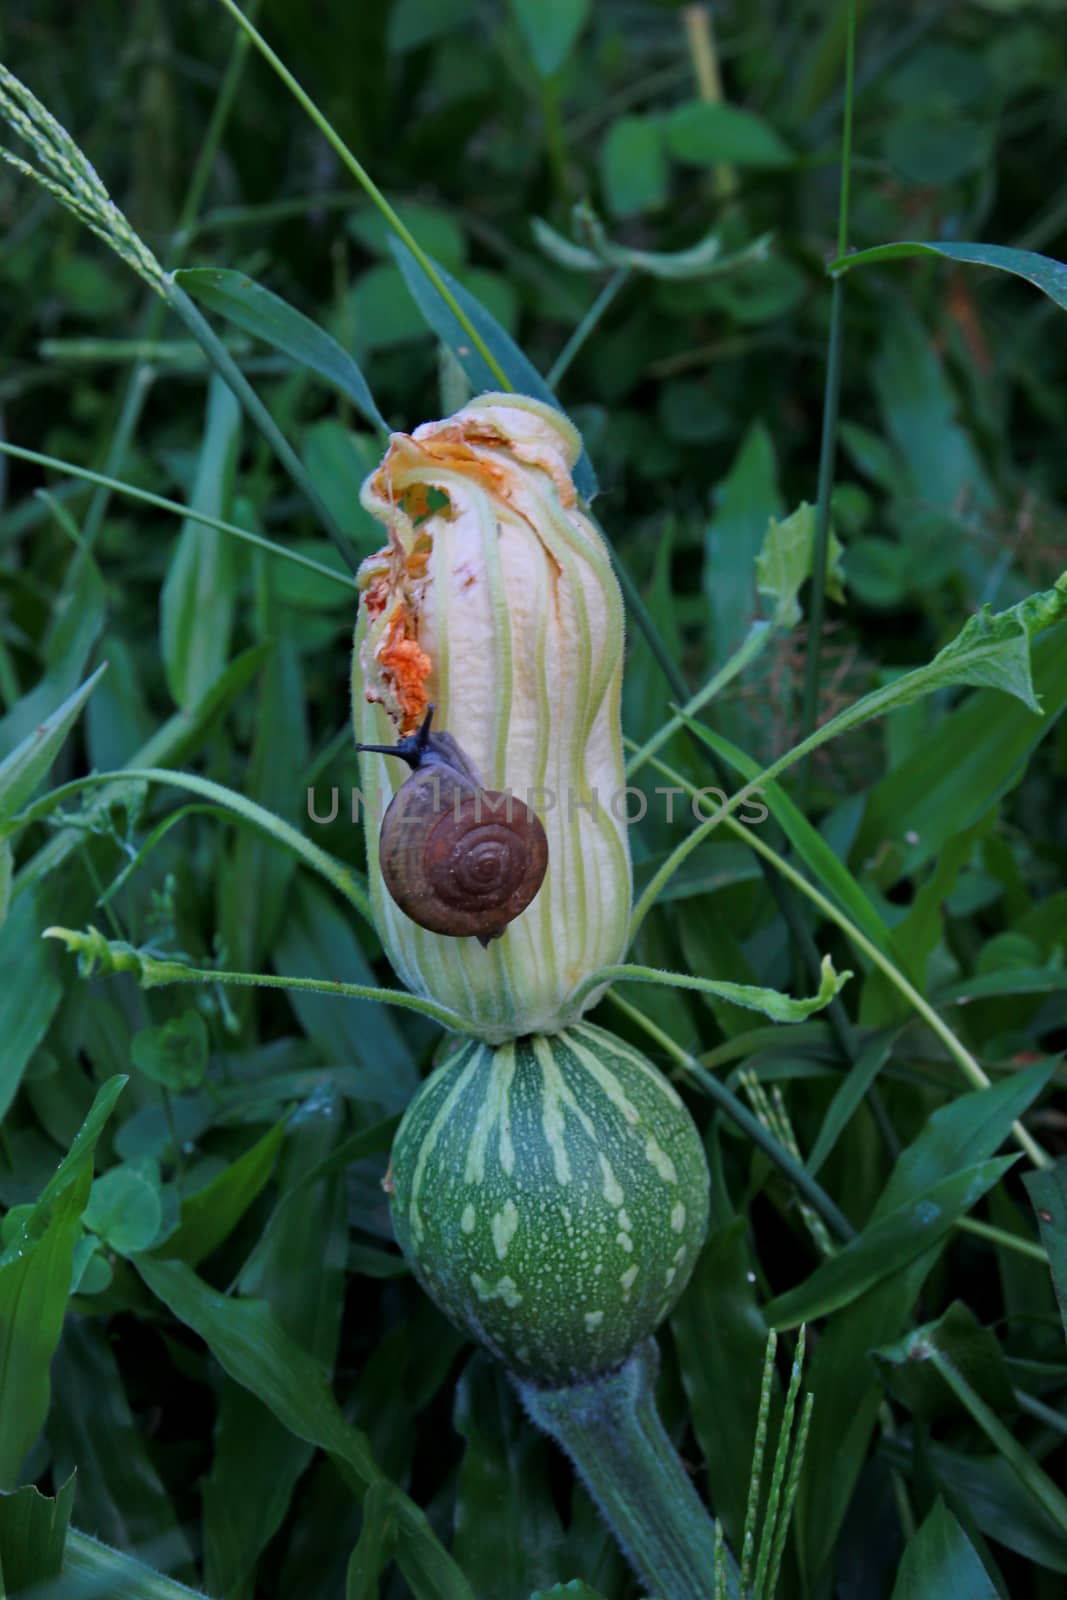 The snail is eating pumpkin flower.